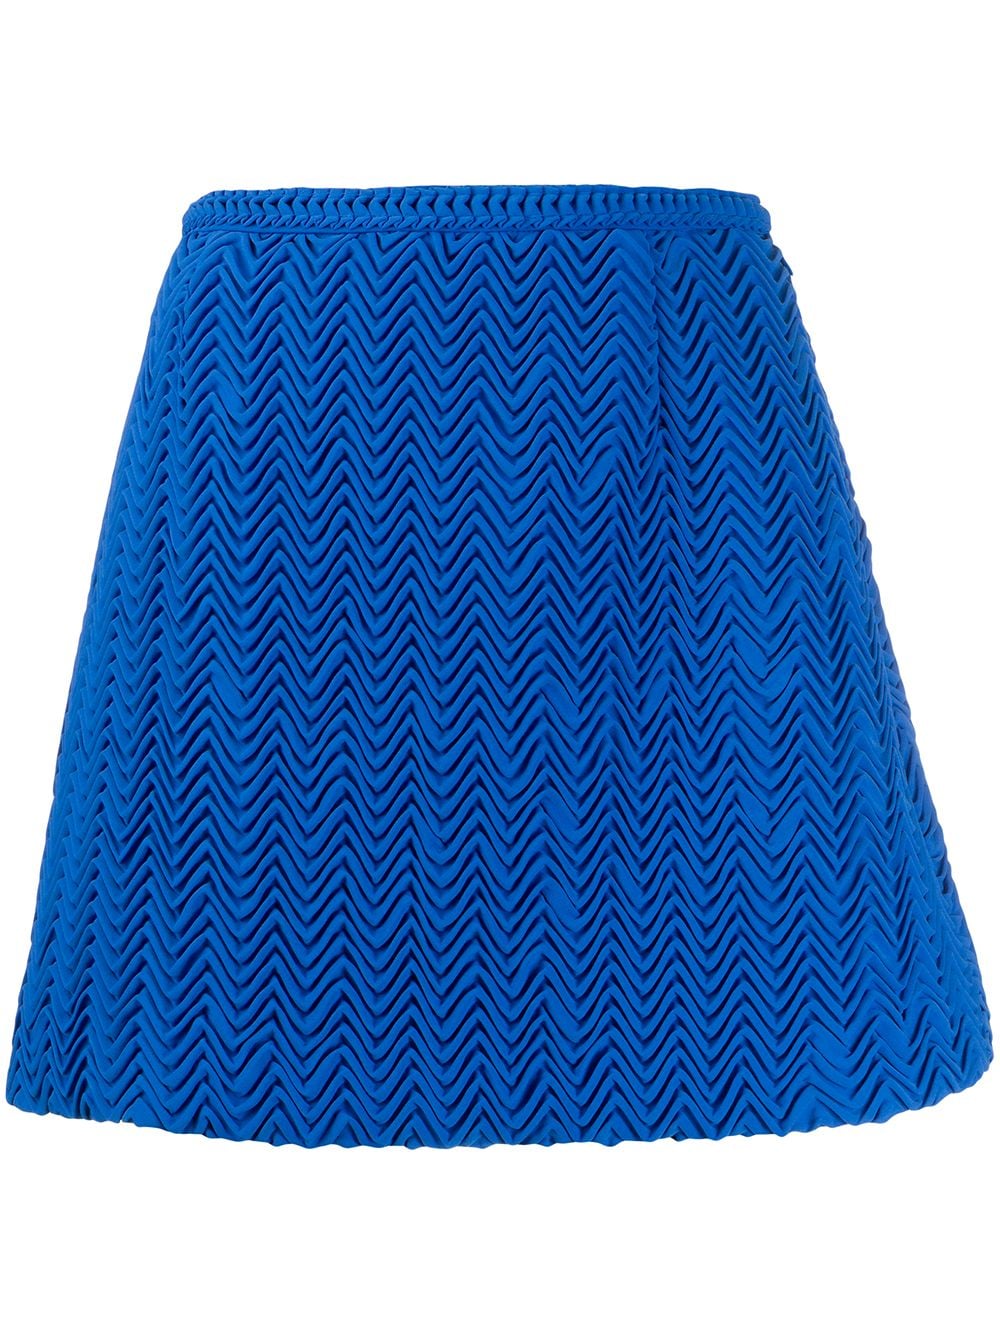 Image 1 of embroidered mini skirt embroidered mini skirt